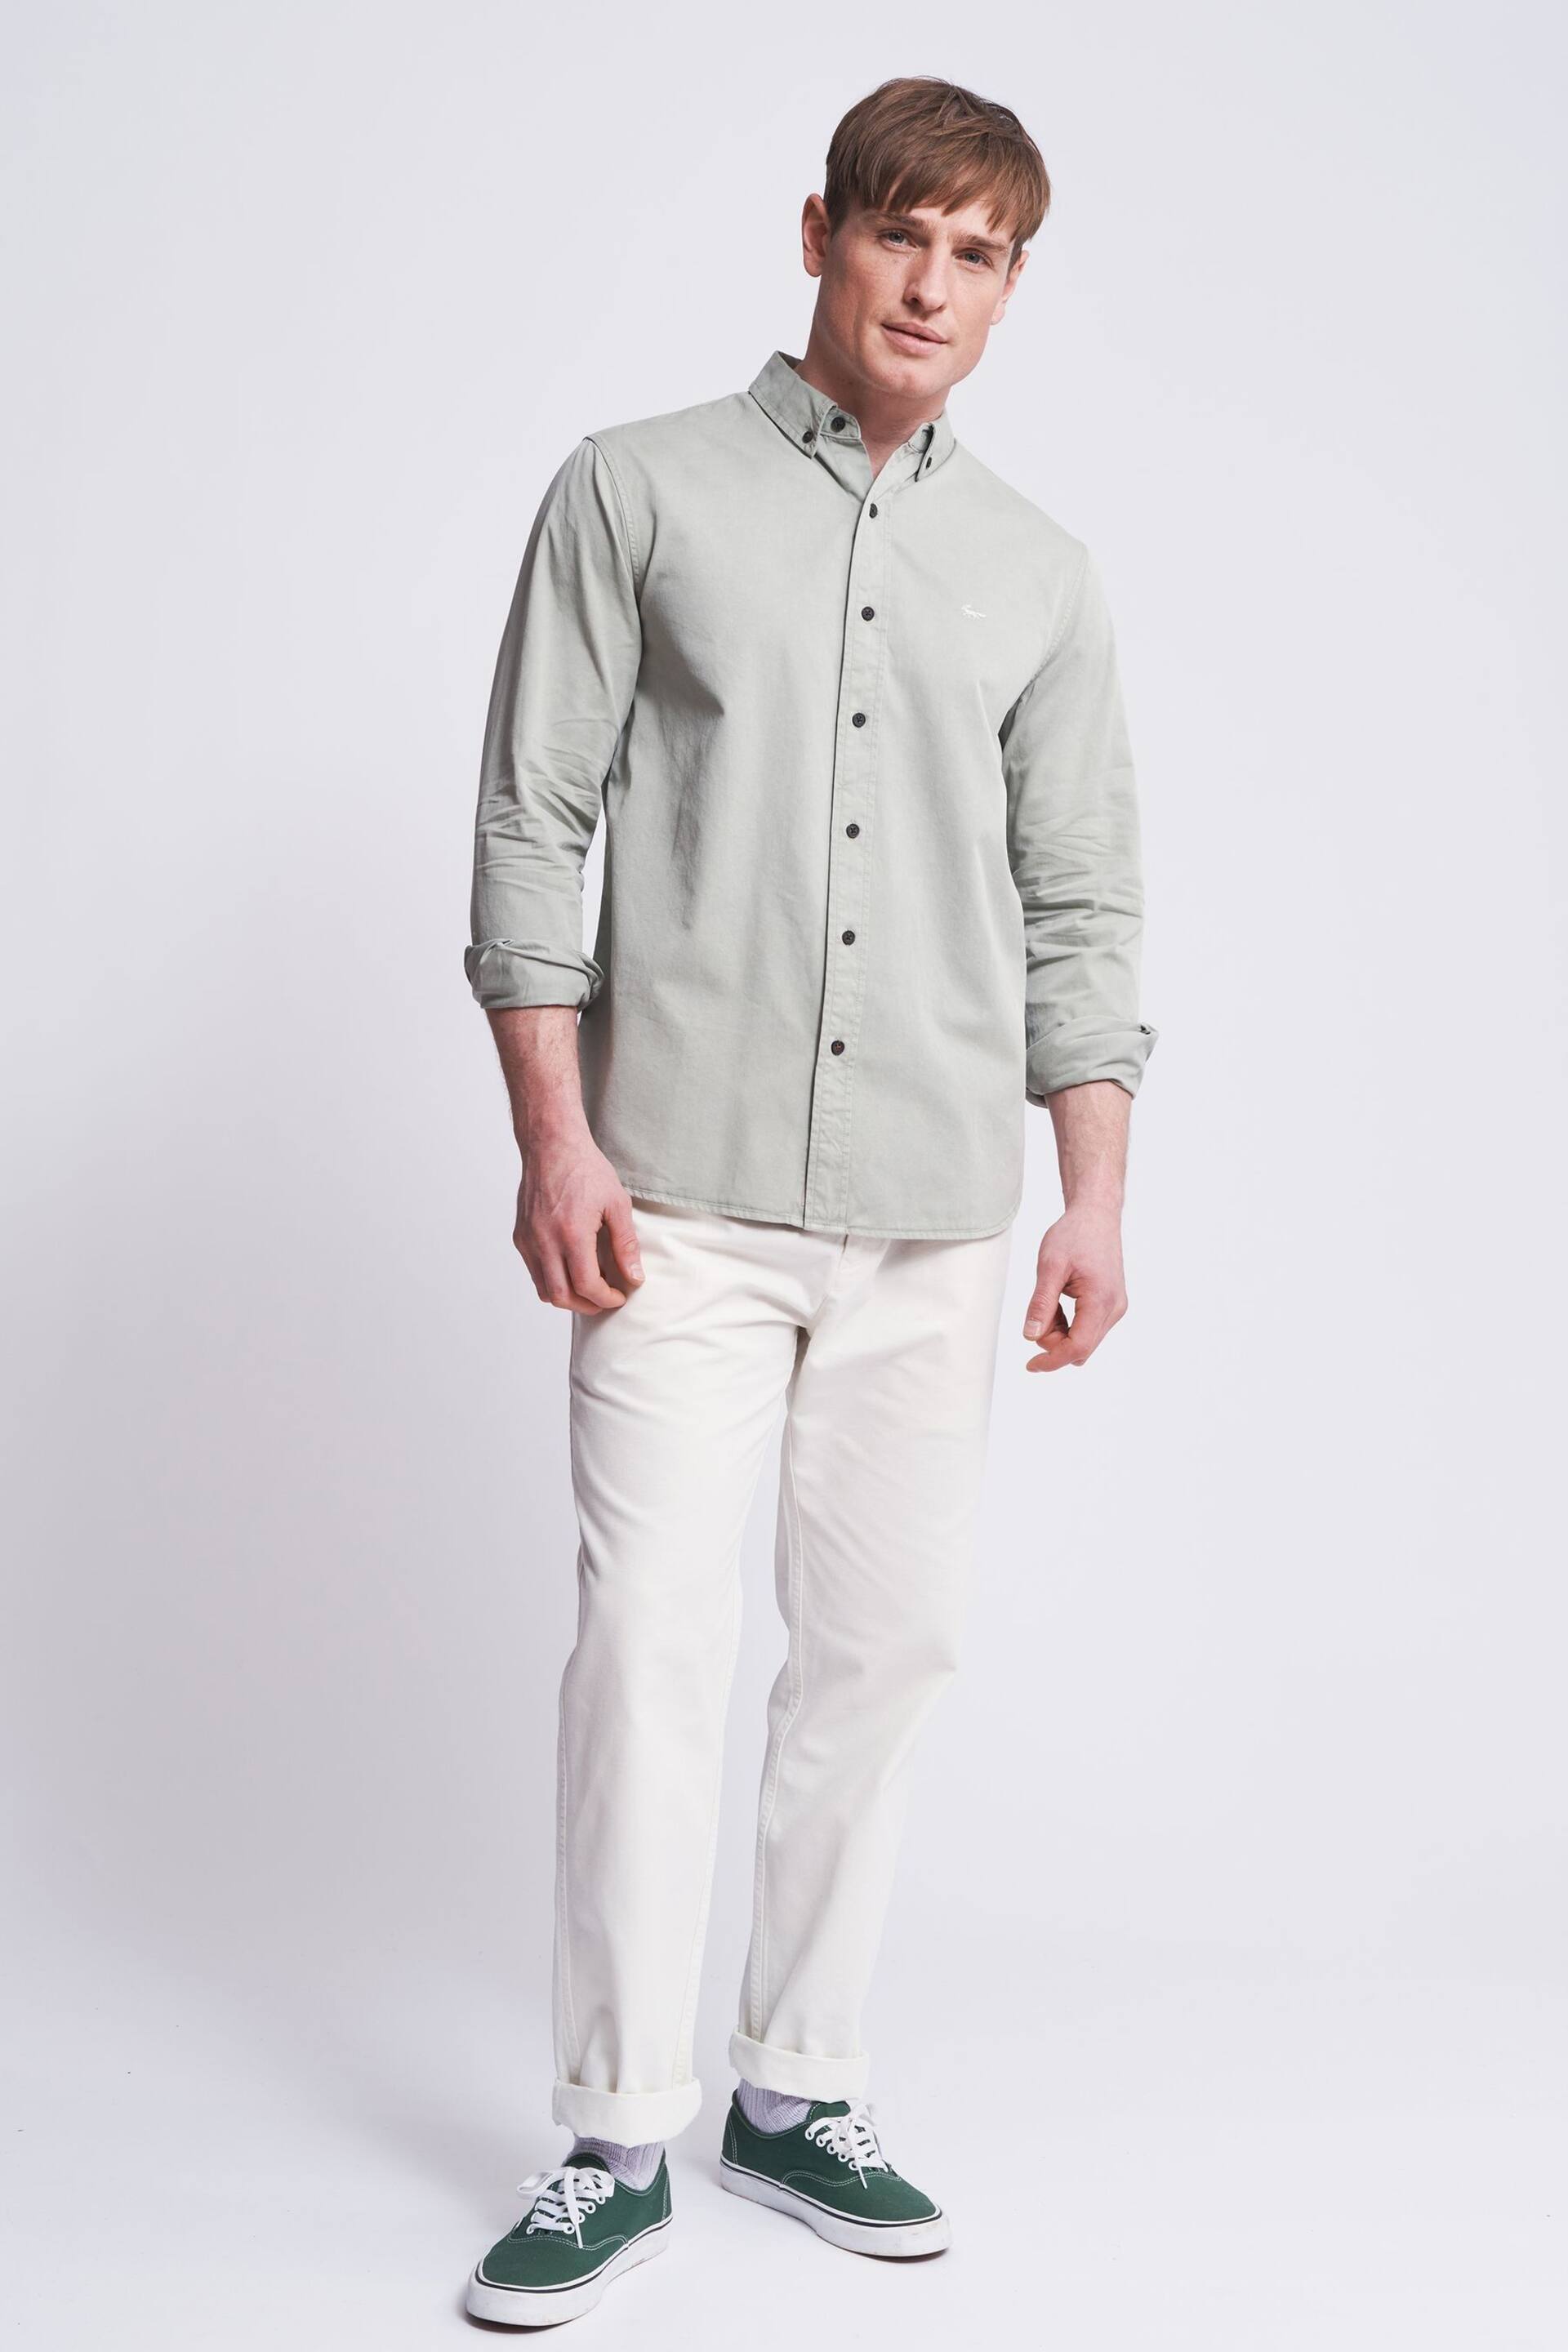 Aubin Hessle Garment Dyed Shirt - Image 3 of 7